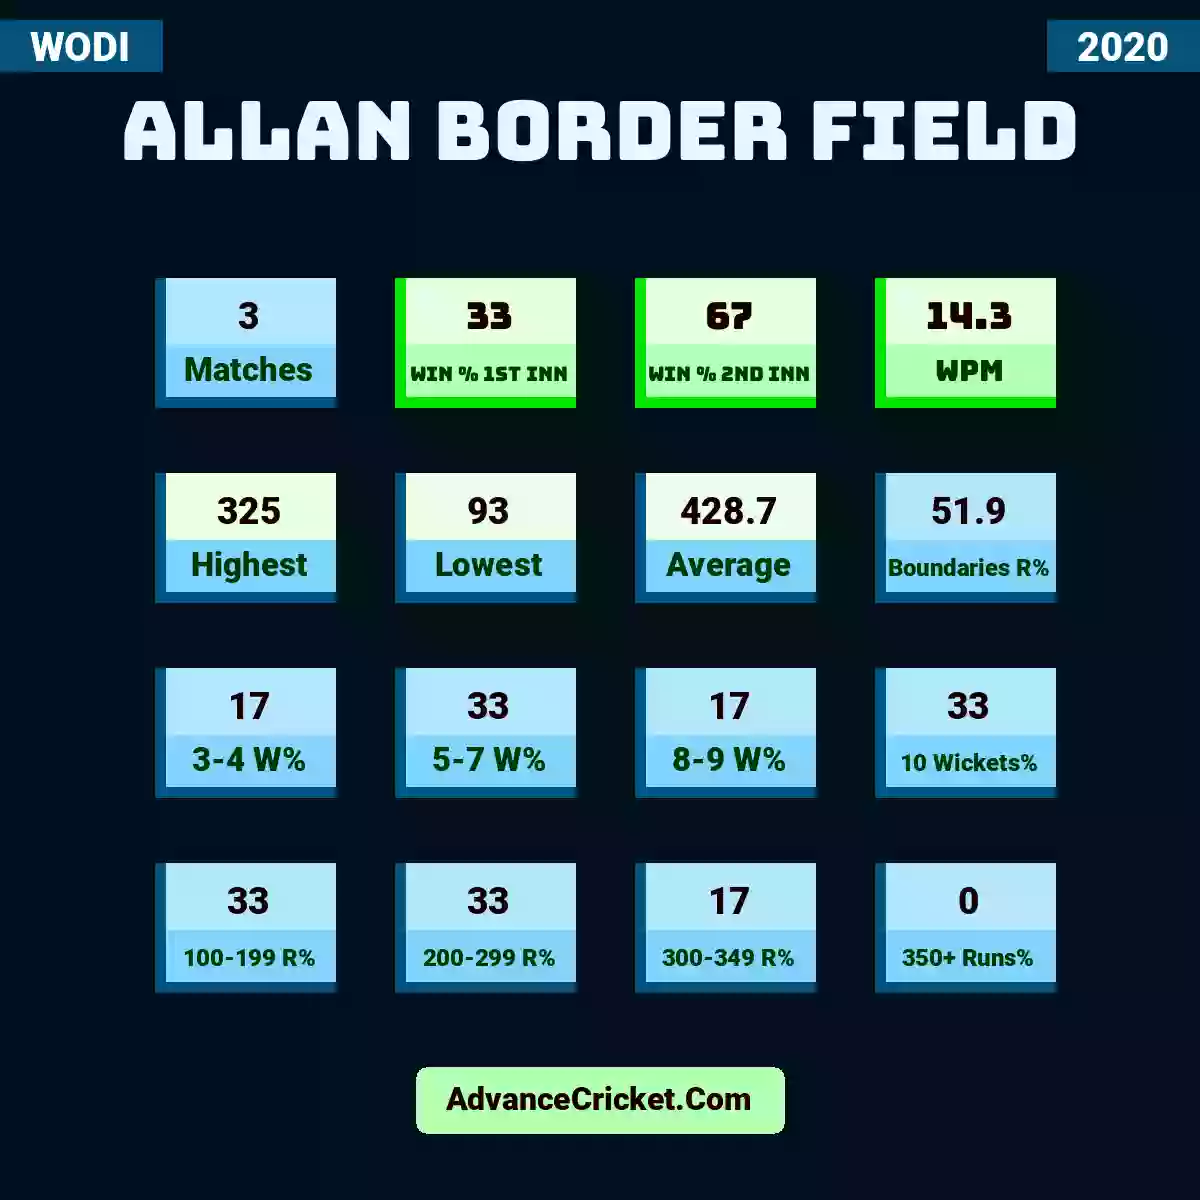 Image showing Allan Border Field with Matches: 3, Win % 1st Inn: 33, Win % 2nd Inn: 67, WPM: 14.3, Highest: 325, Lowest: 93, Average: 428.7, Boundaries R%: 51.9, 3-4 W%: 17, 5-7 W%: 33, 8-9 W%: 17, 10 Wickets%: 33, 100-199 R%: 33, 200-299 R%: 33, 300-349 R%: 17, 350+ Runs%: 0.